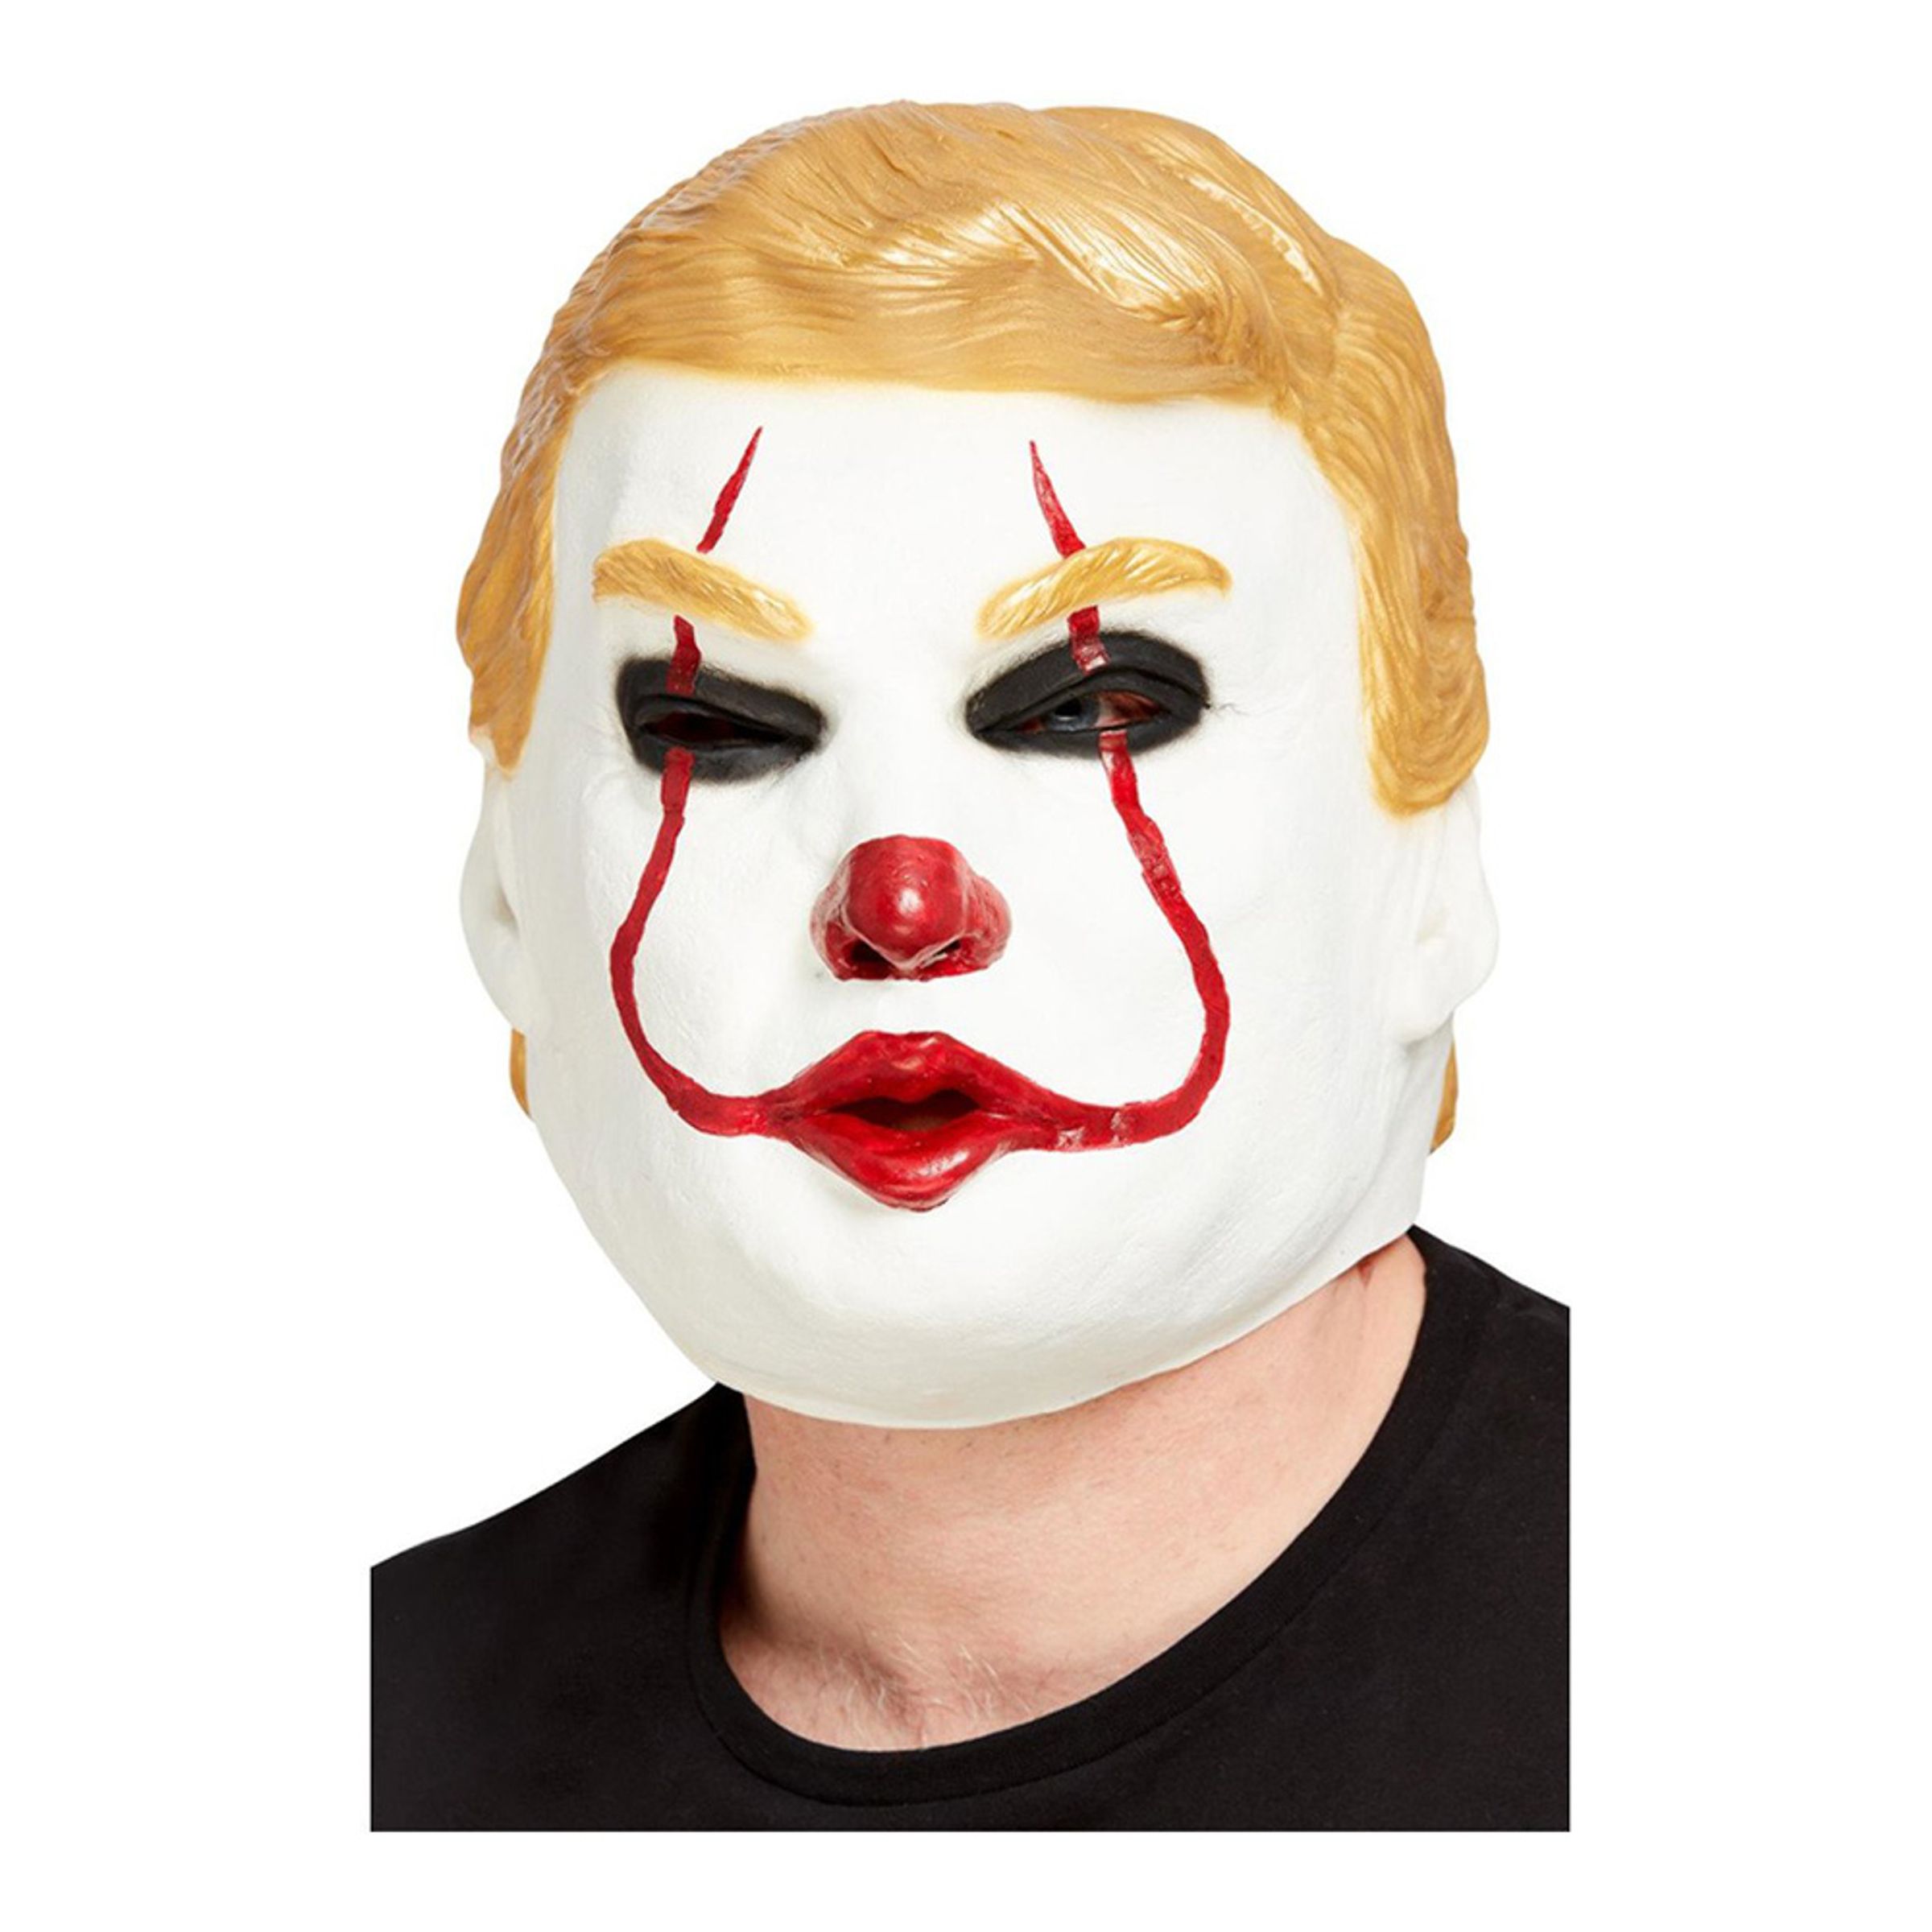 Presidentclown Mask - One size